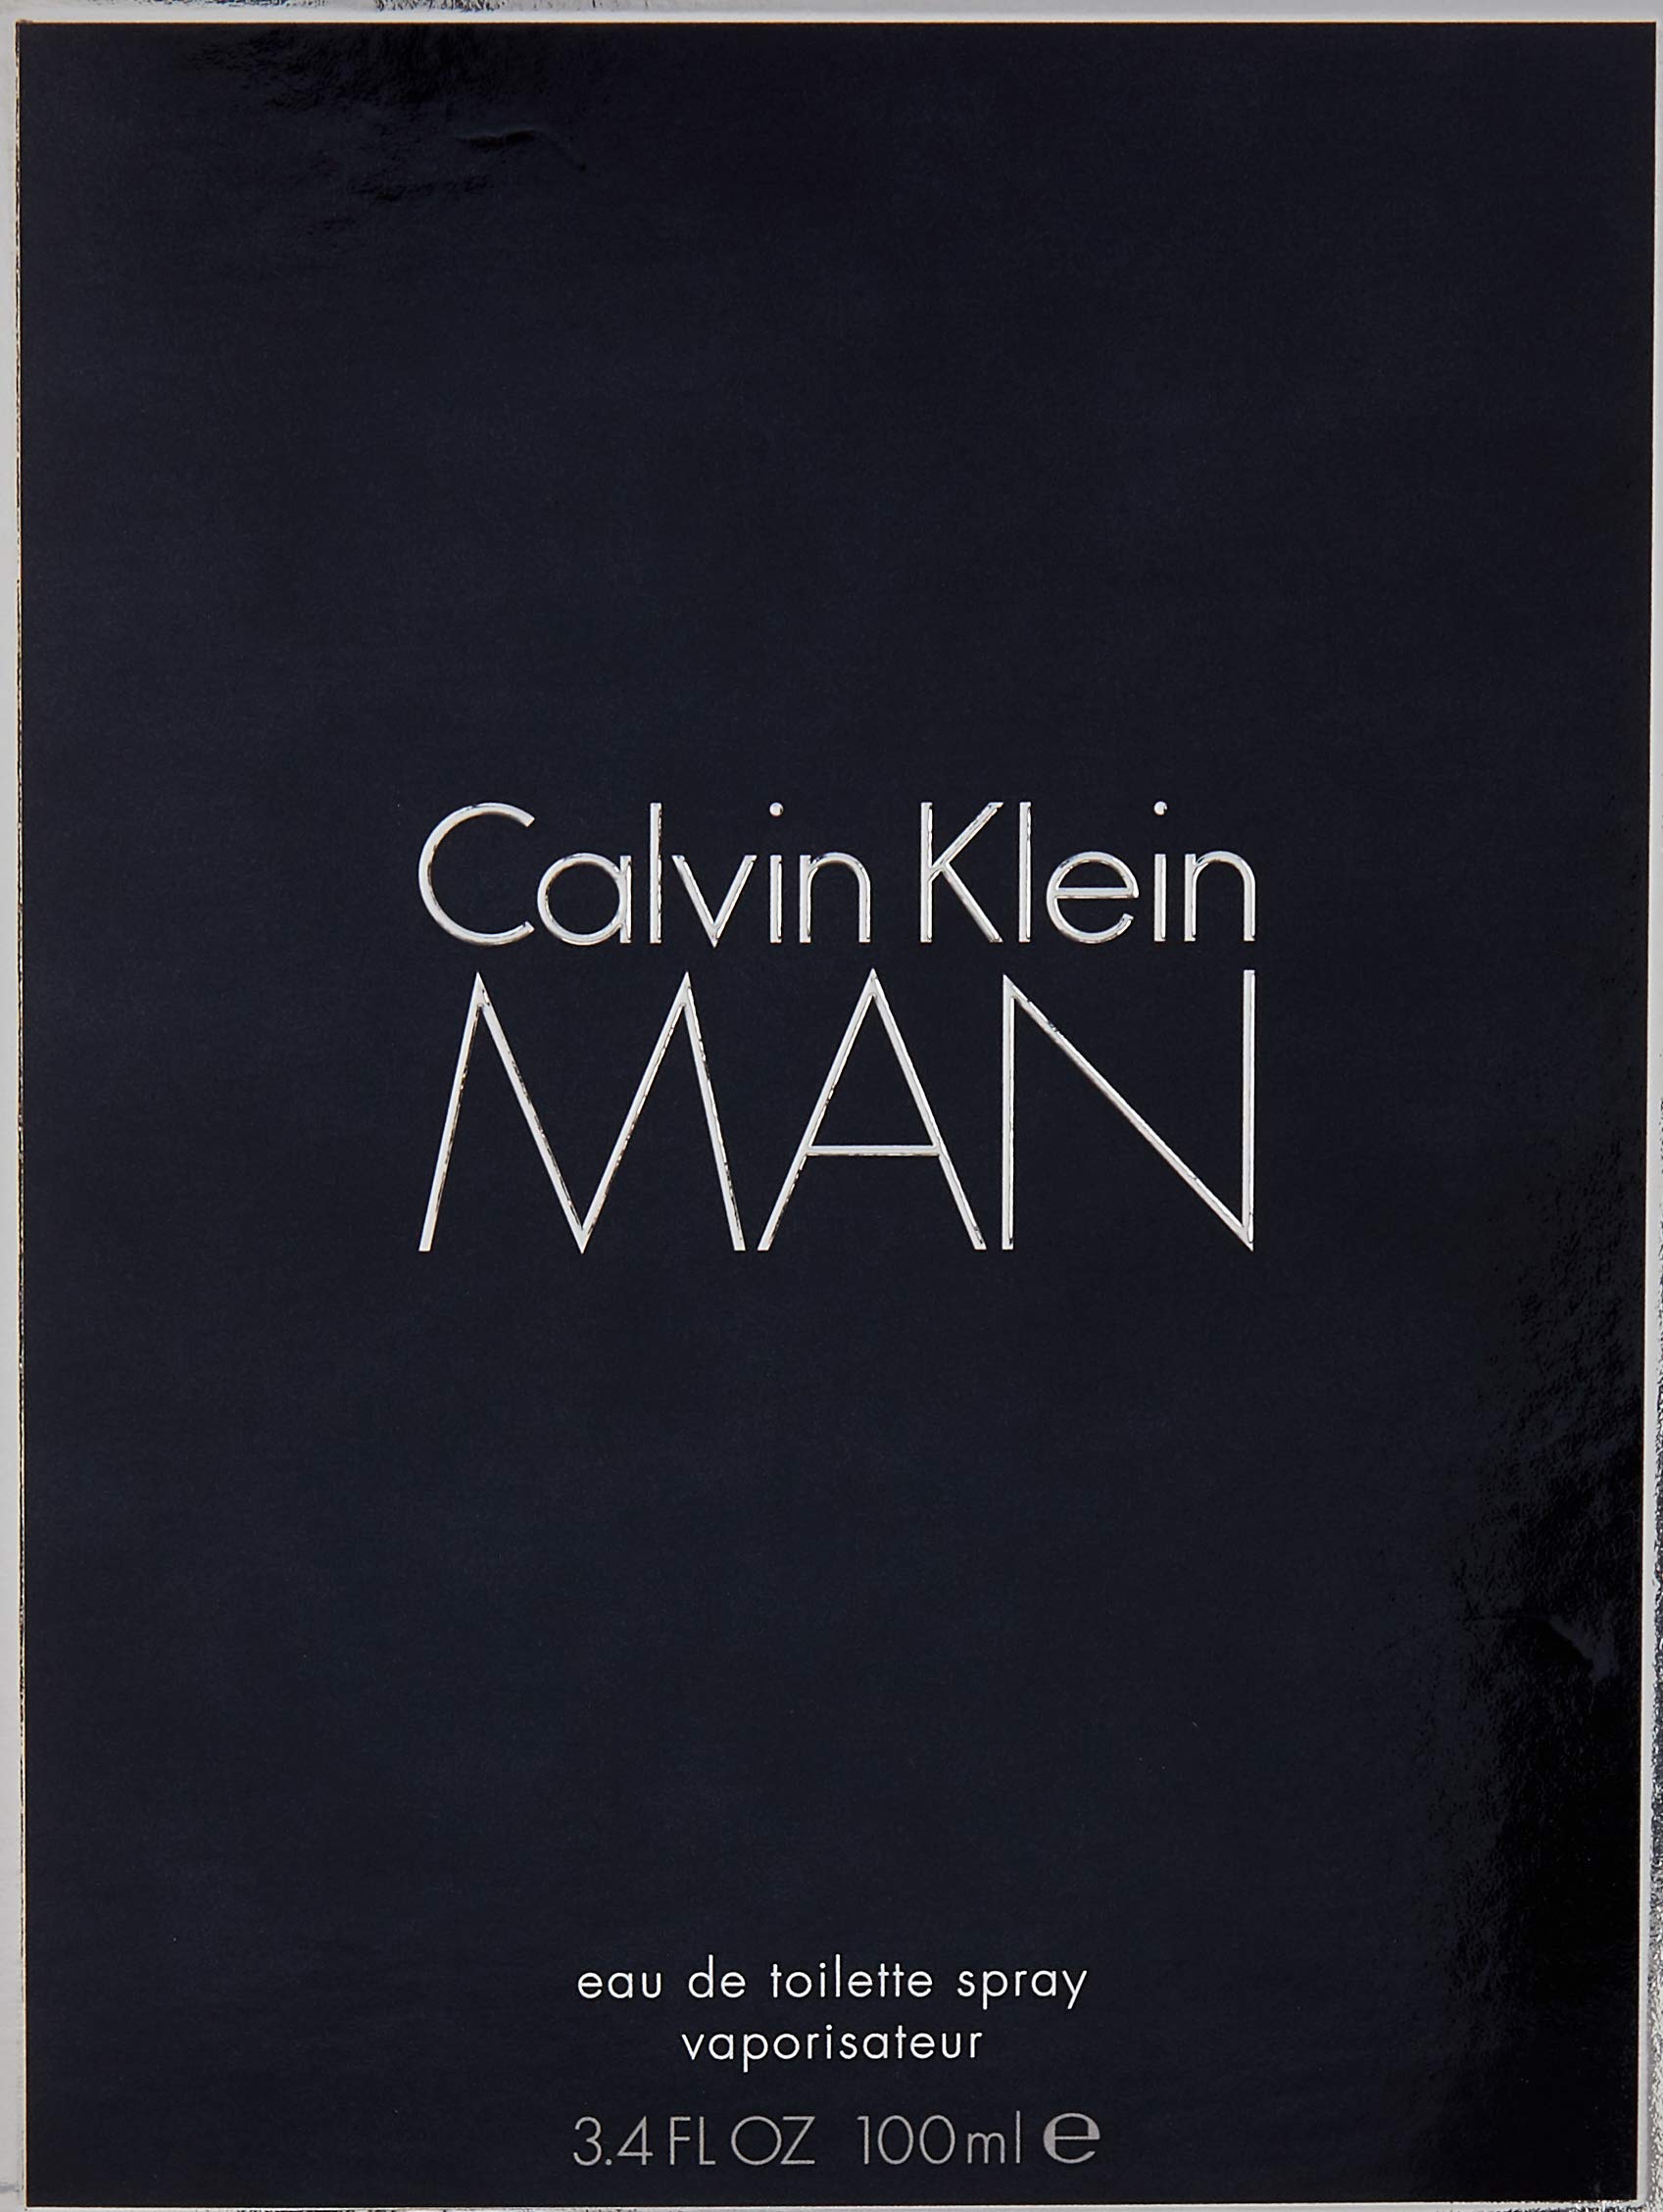 CK Man by Calvin Klein 3.4 oz 100 ml Eau de Toilette Spray | eBay